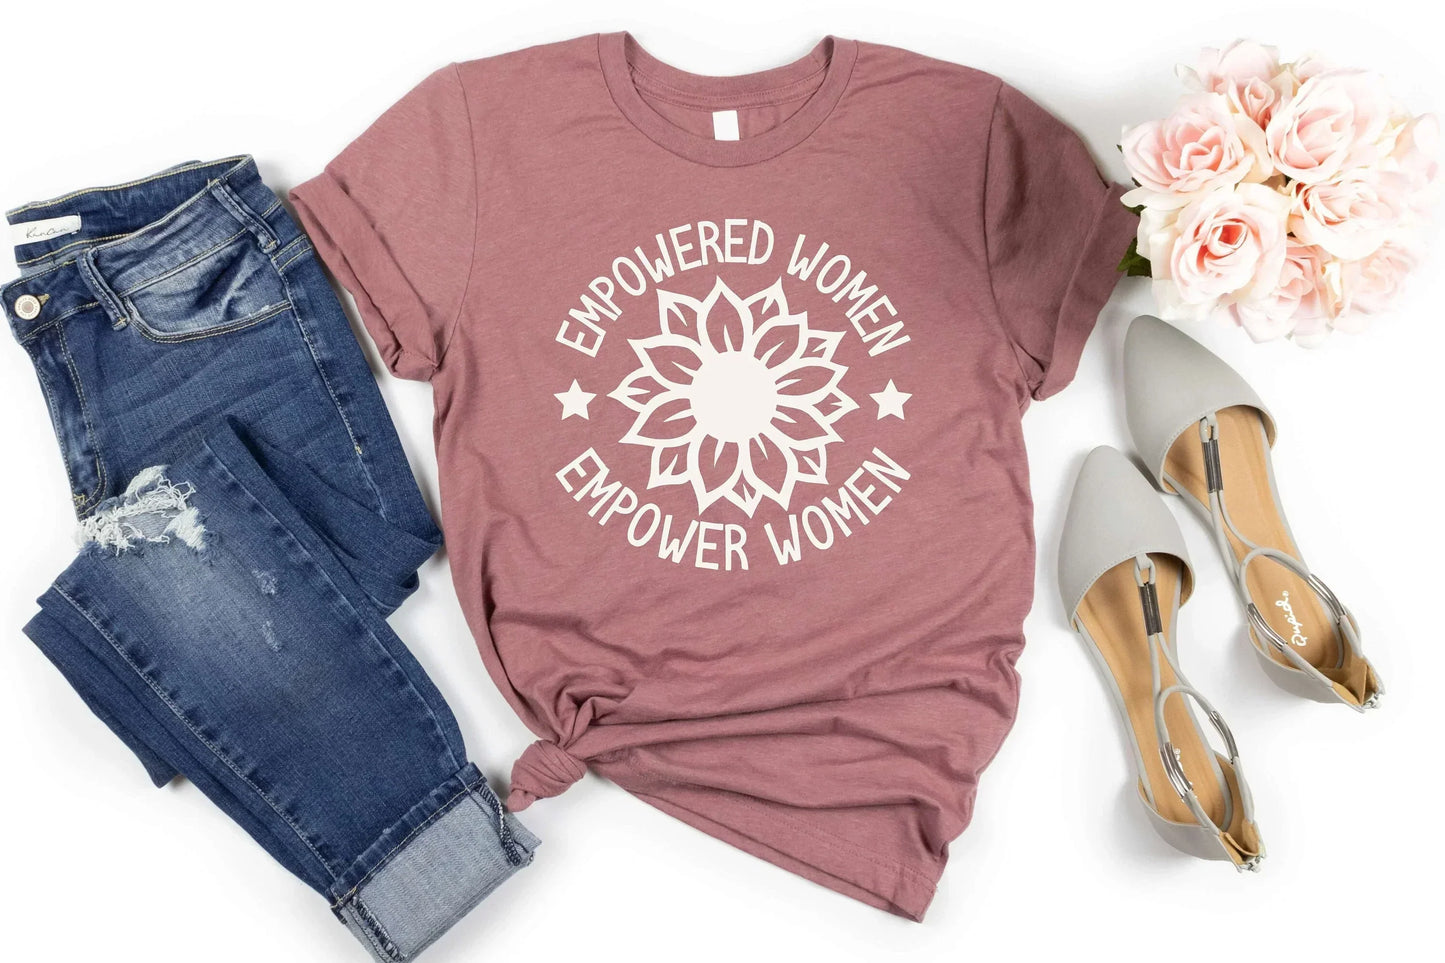 Empowered Women Empower Women T-Shirt | Prochoice Sweatshirt | Feminism | Equal Rights Hoodie | Women's Month Tshirt | Feminist Tops & Tees HMDesignStudioUS